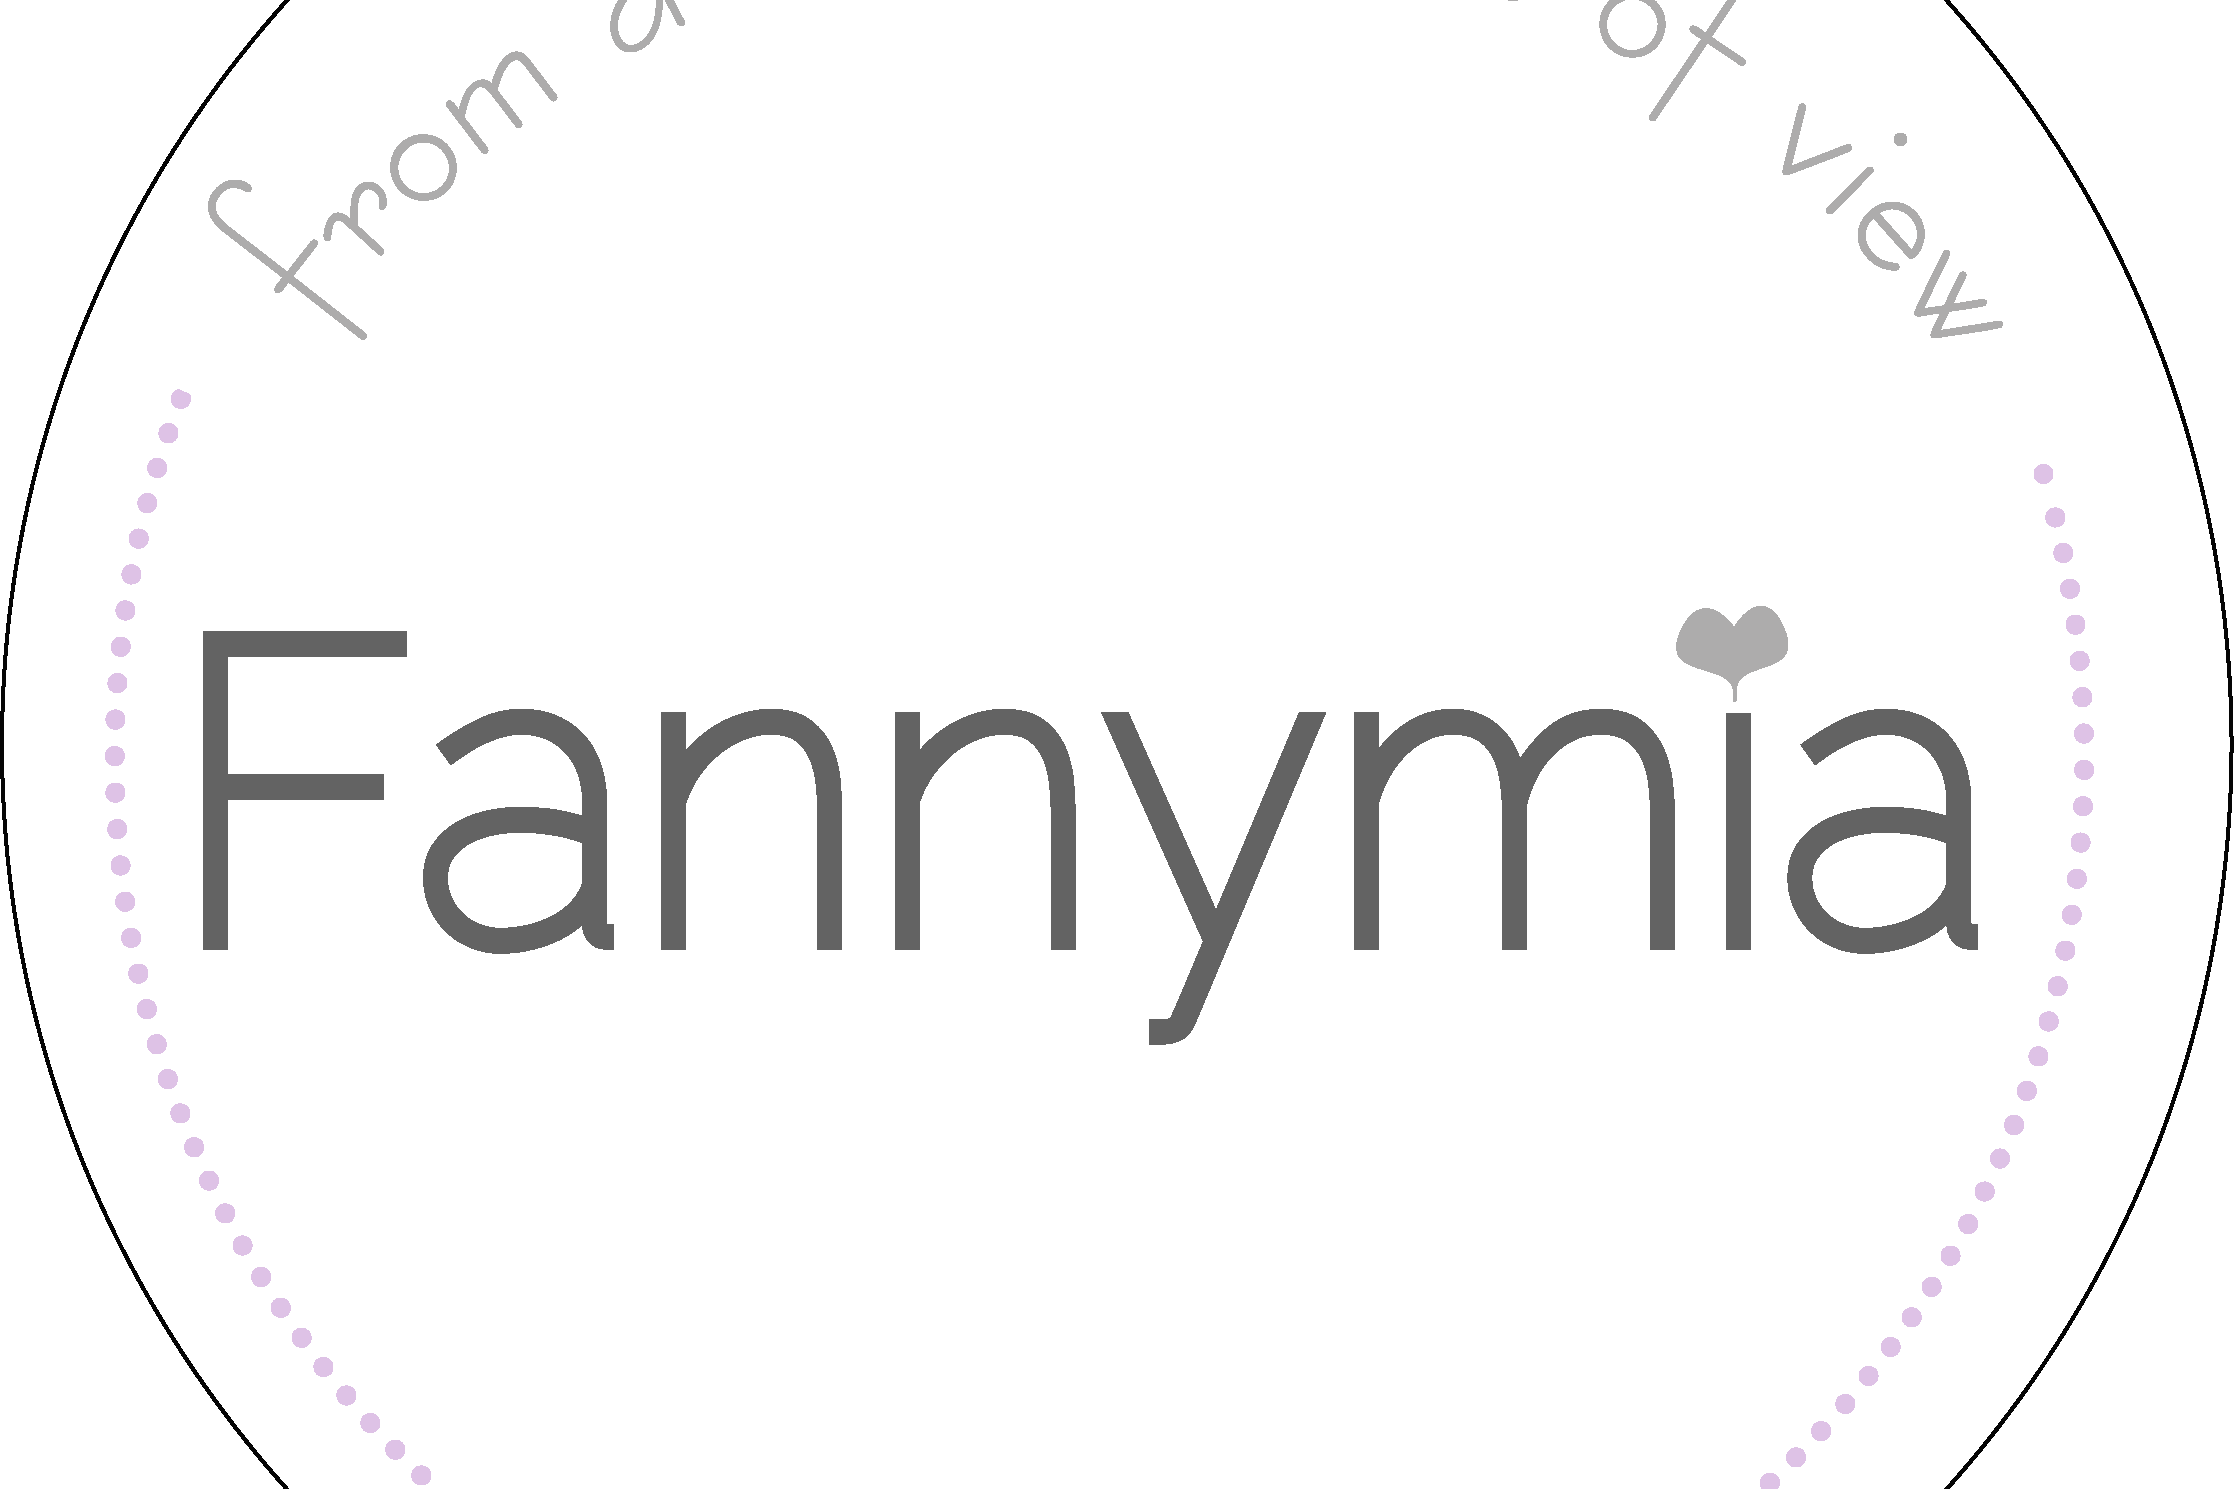 Fannymia logo